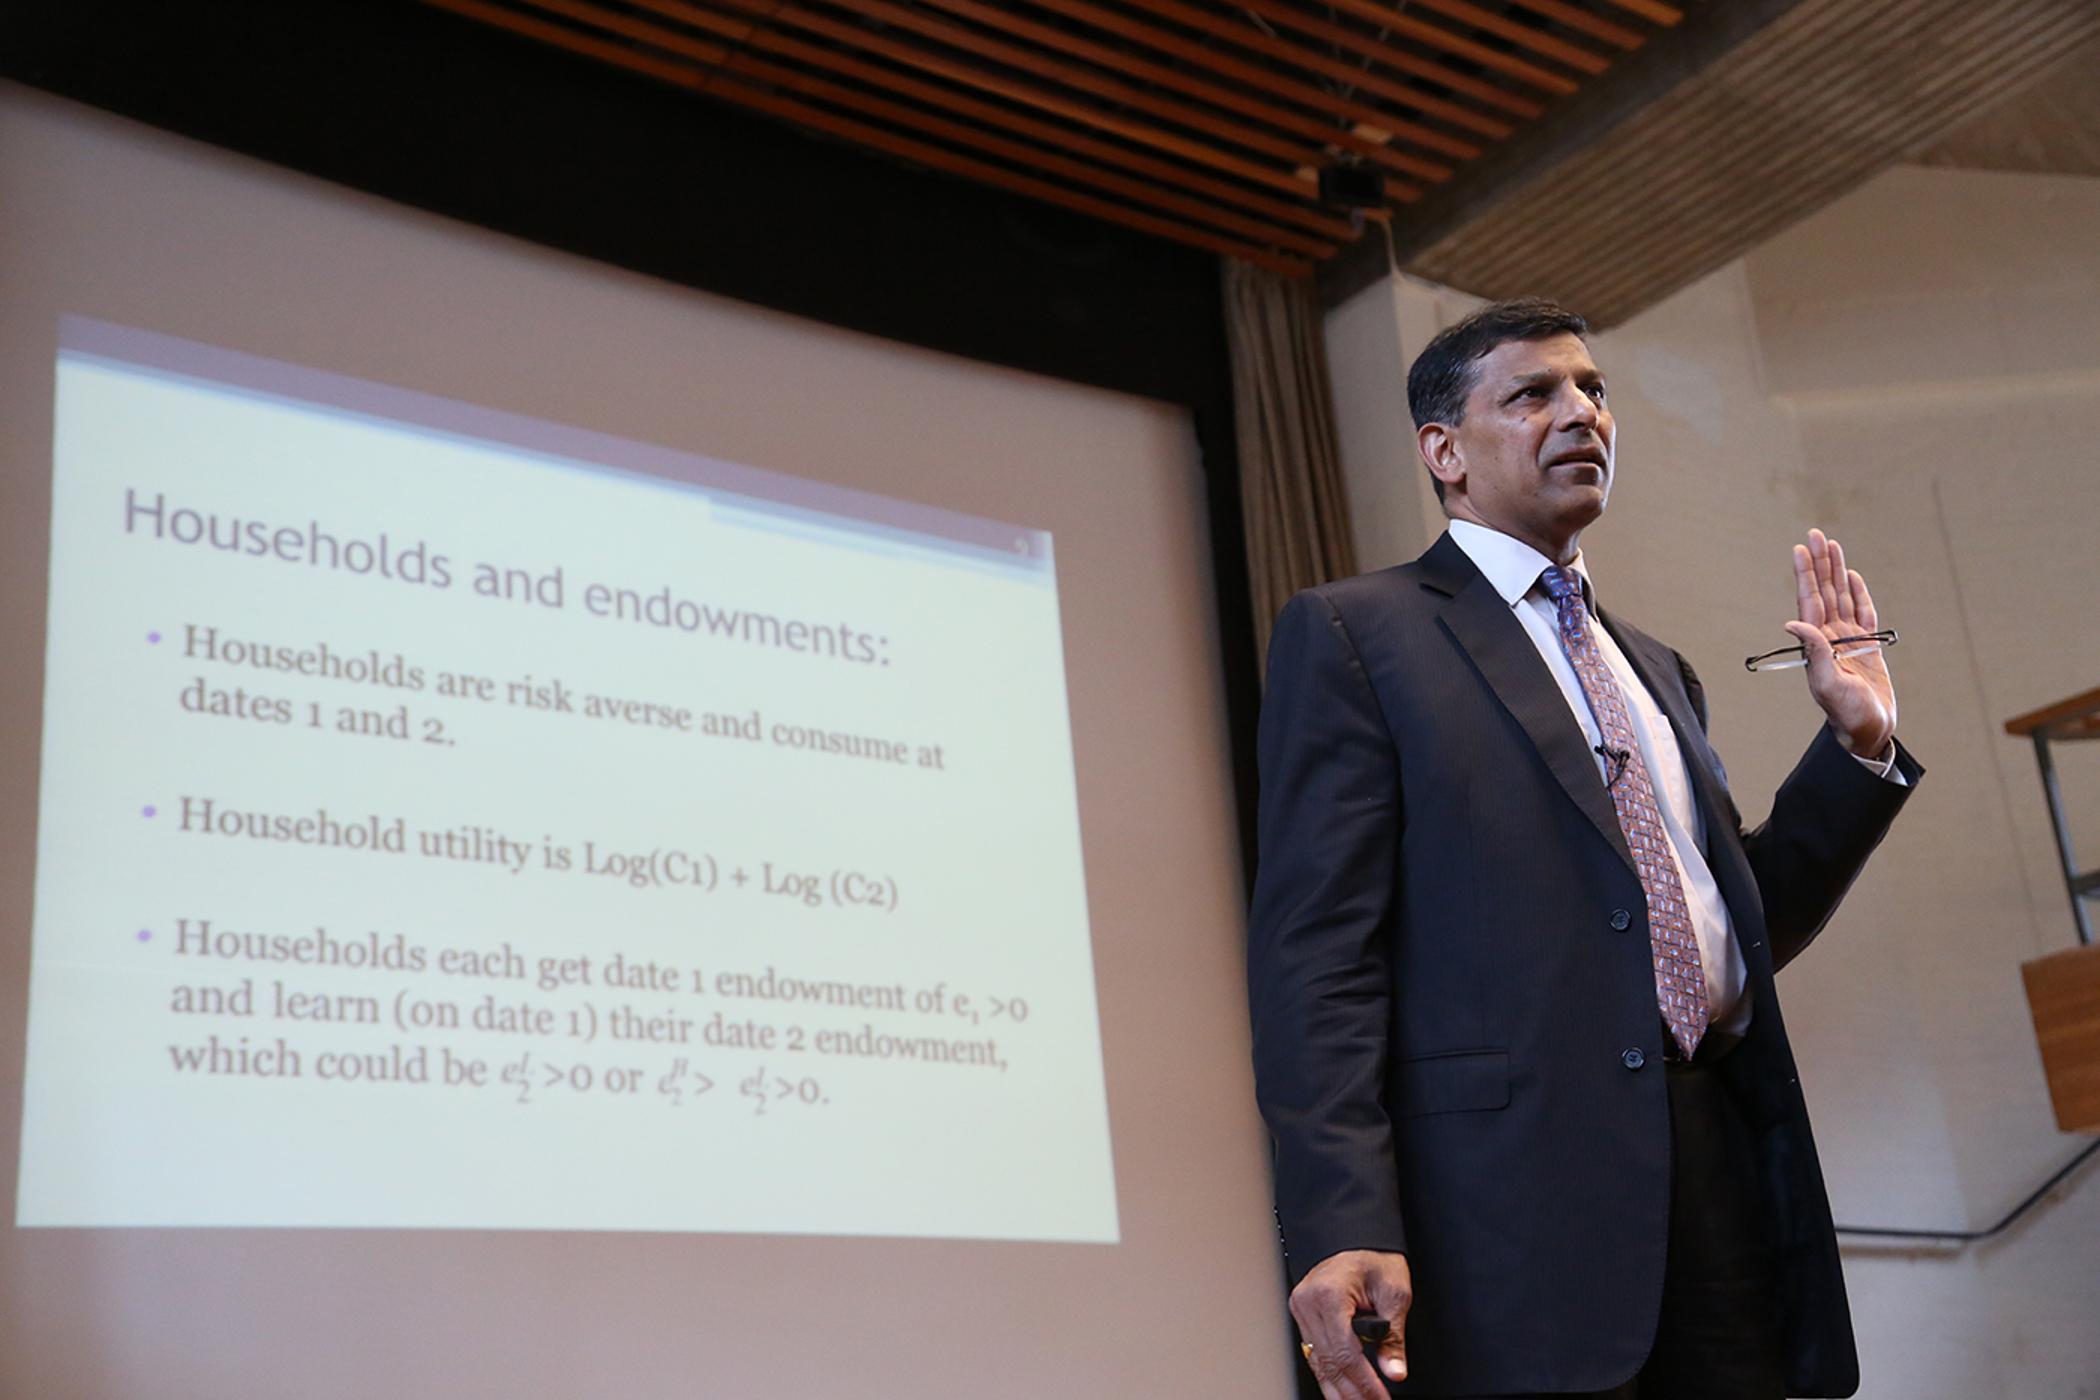 Marshall Lecture 2015/2016 - Professor Raghuram Rajan - ”Why Have Banks?”